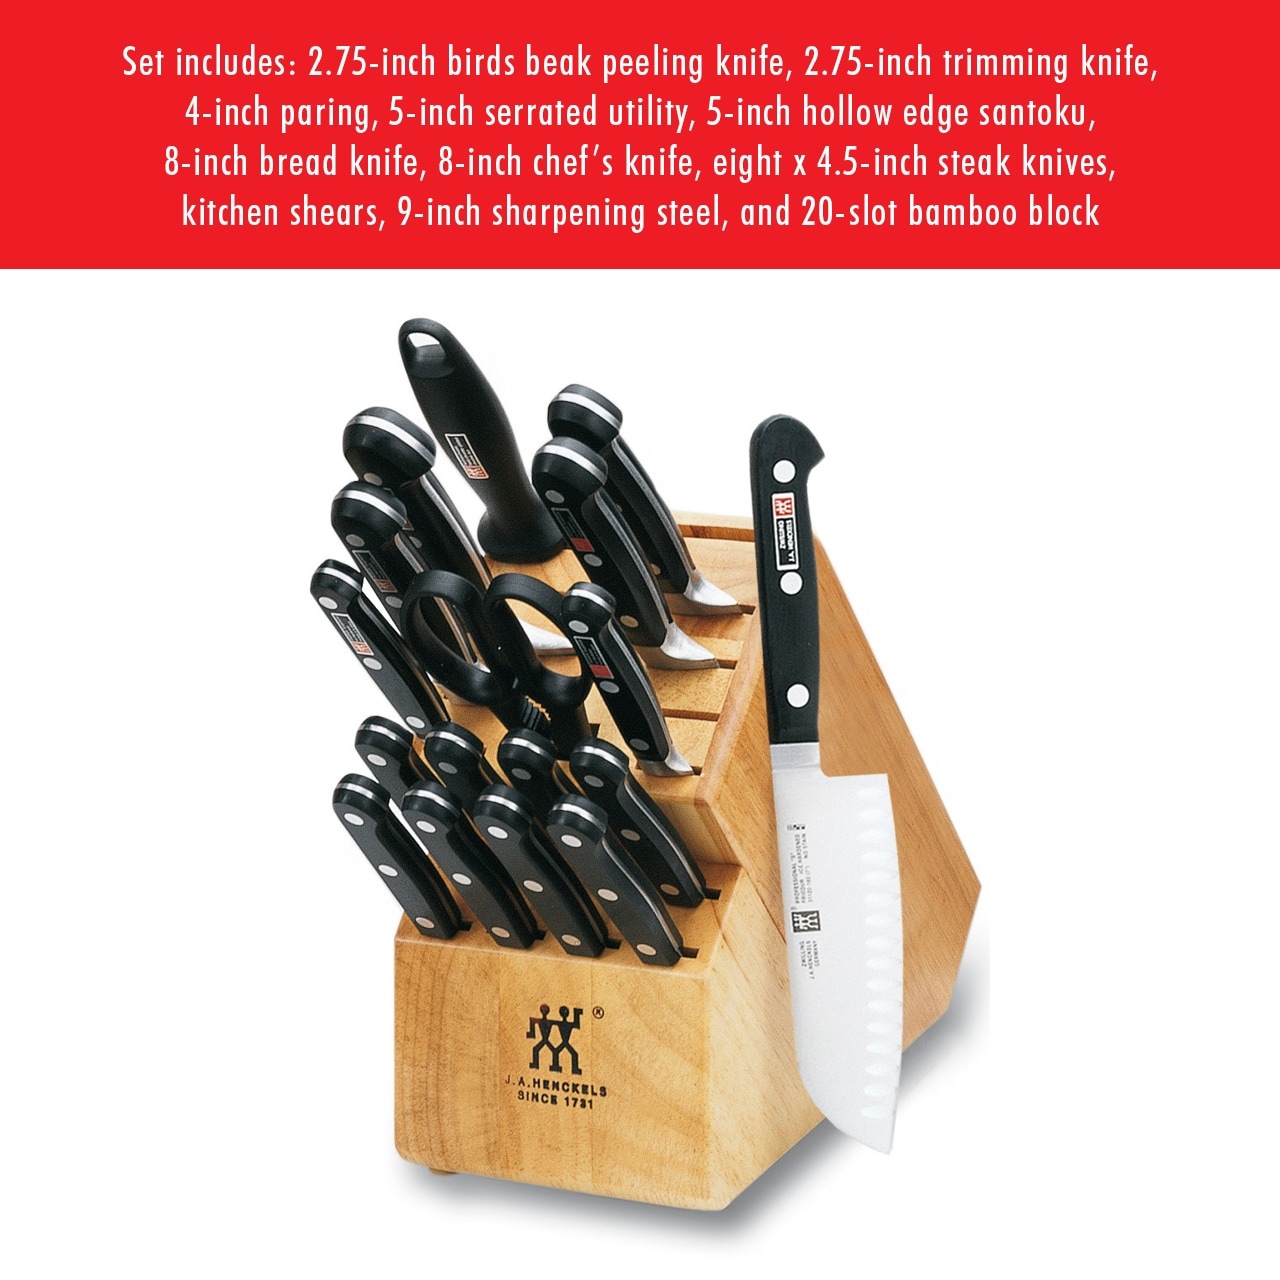 https://ak1.ostkcdn.com/images/products/is/images/direct/883284b94f0fb7c4fafc4d381455cc83a3ed7a9a/ZWILLING-Professional-S-18-Piece-Knife-Block-Set%2C-Chef-Knife%2C-Serrated-Utility-Knife%2C-Steak-Knife-Set%2C-Black.jpg